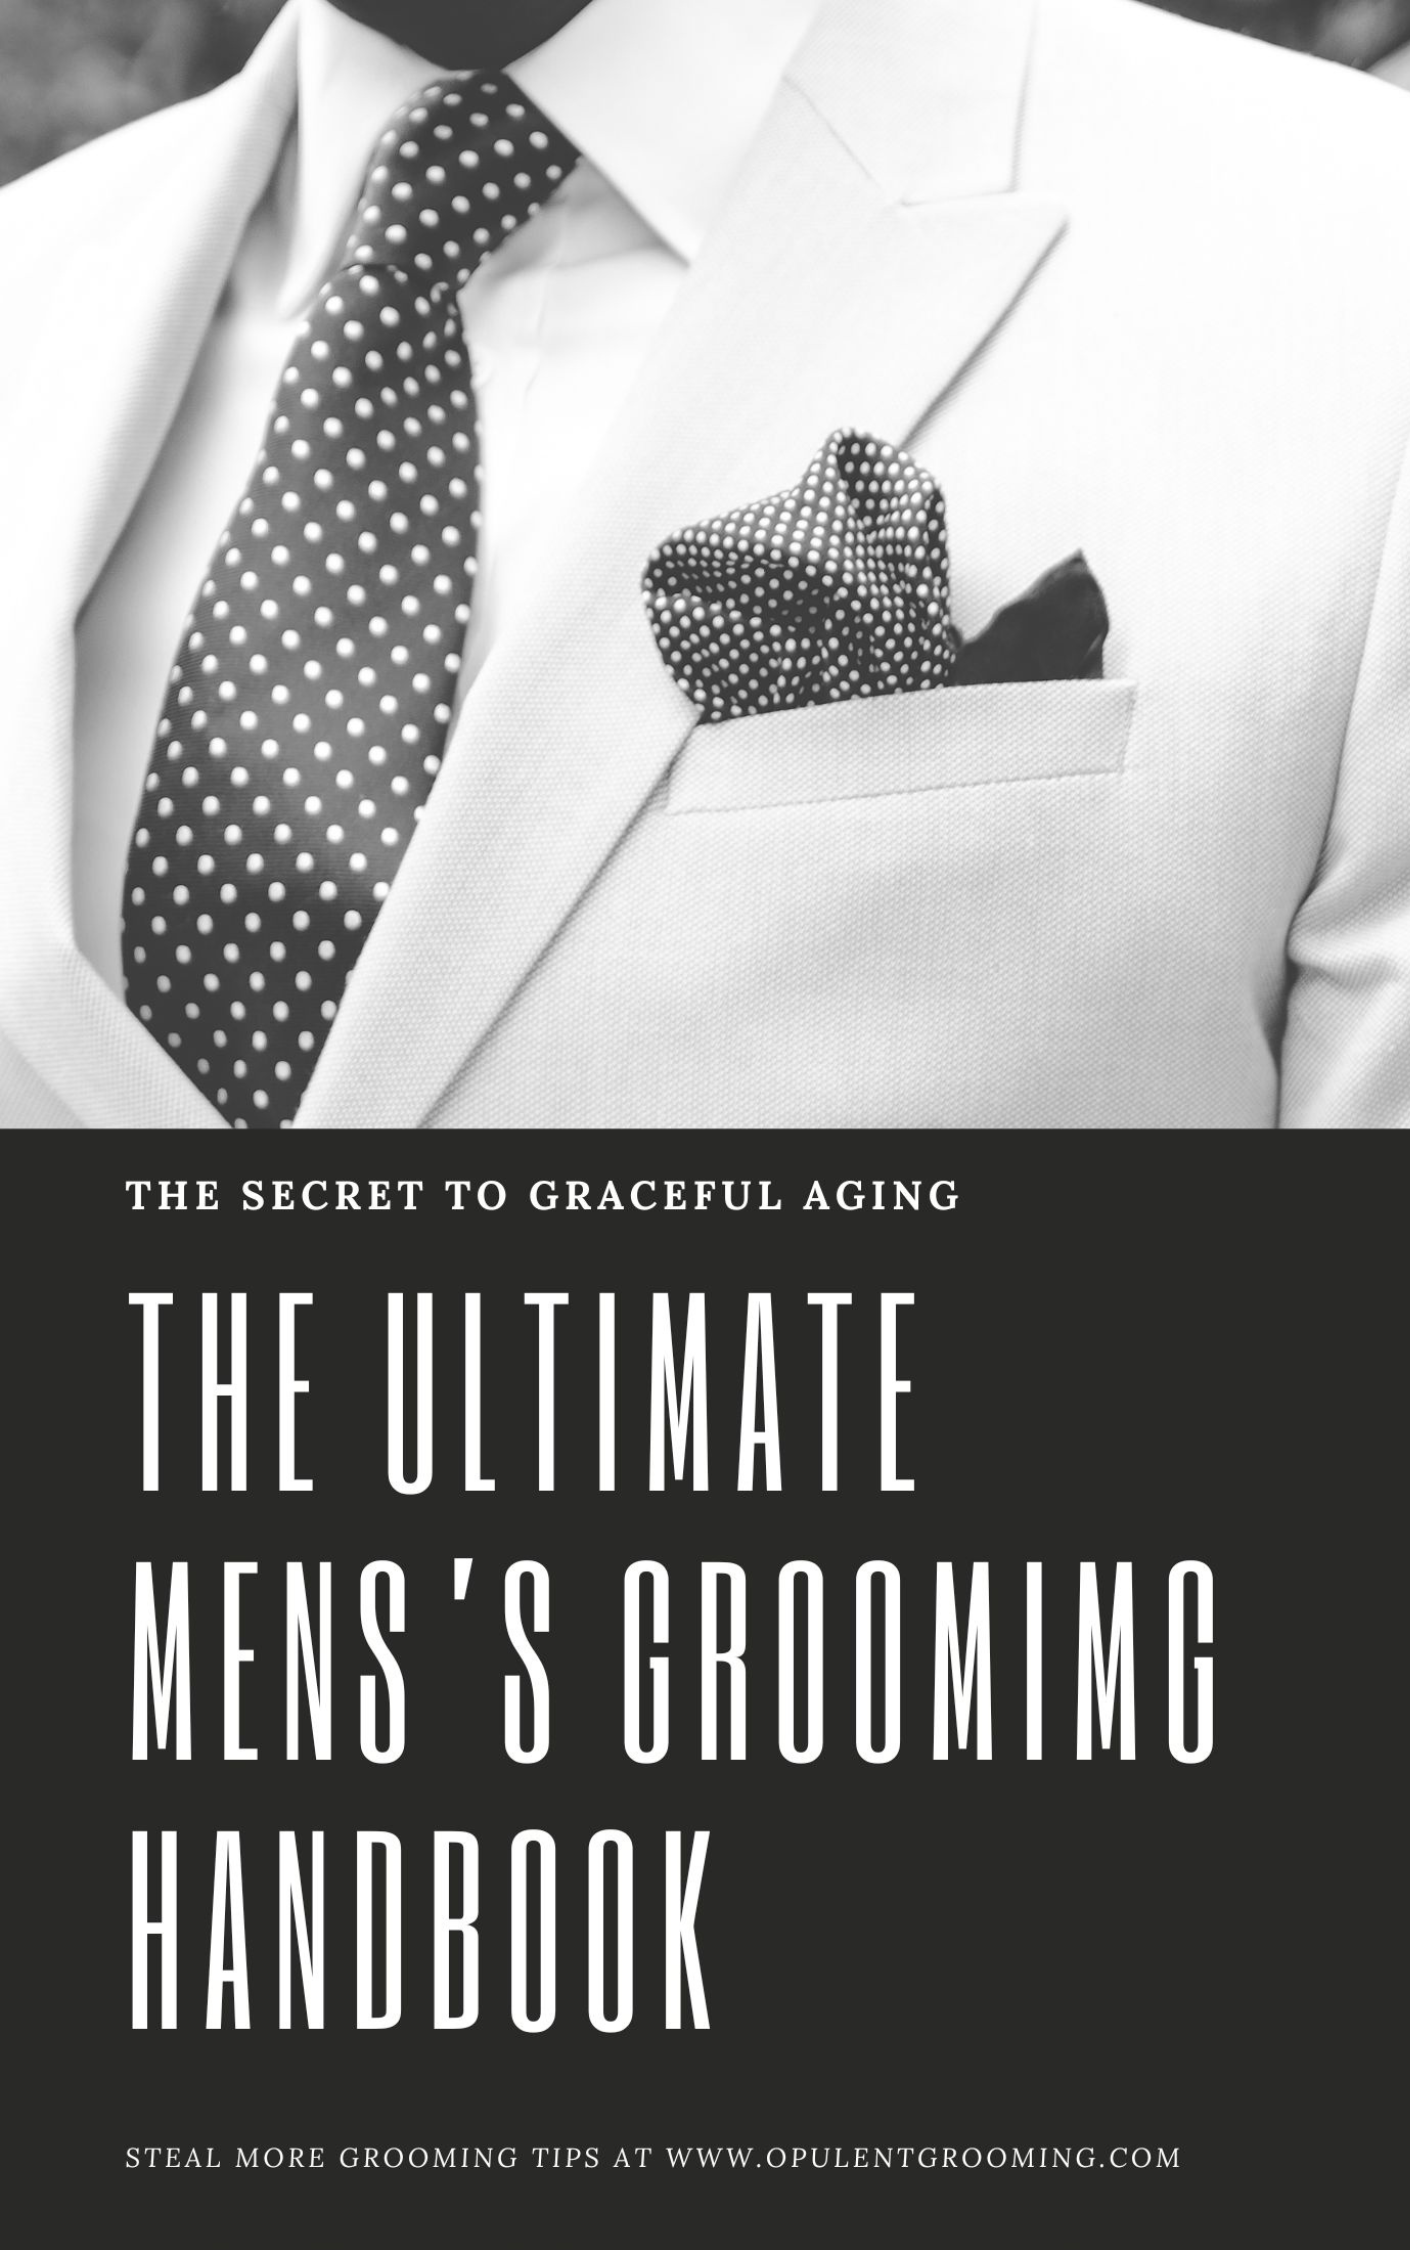 The Ultimate Men's Grooming Handbook